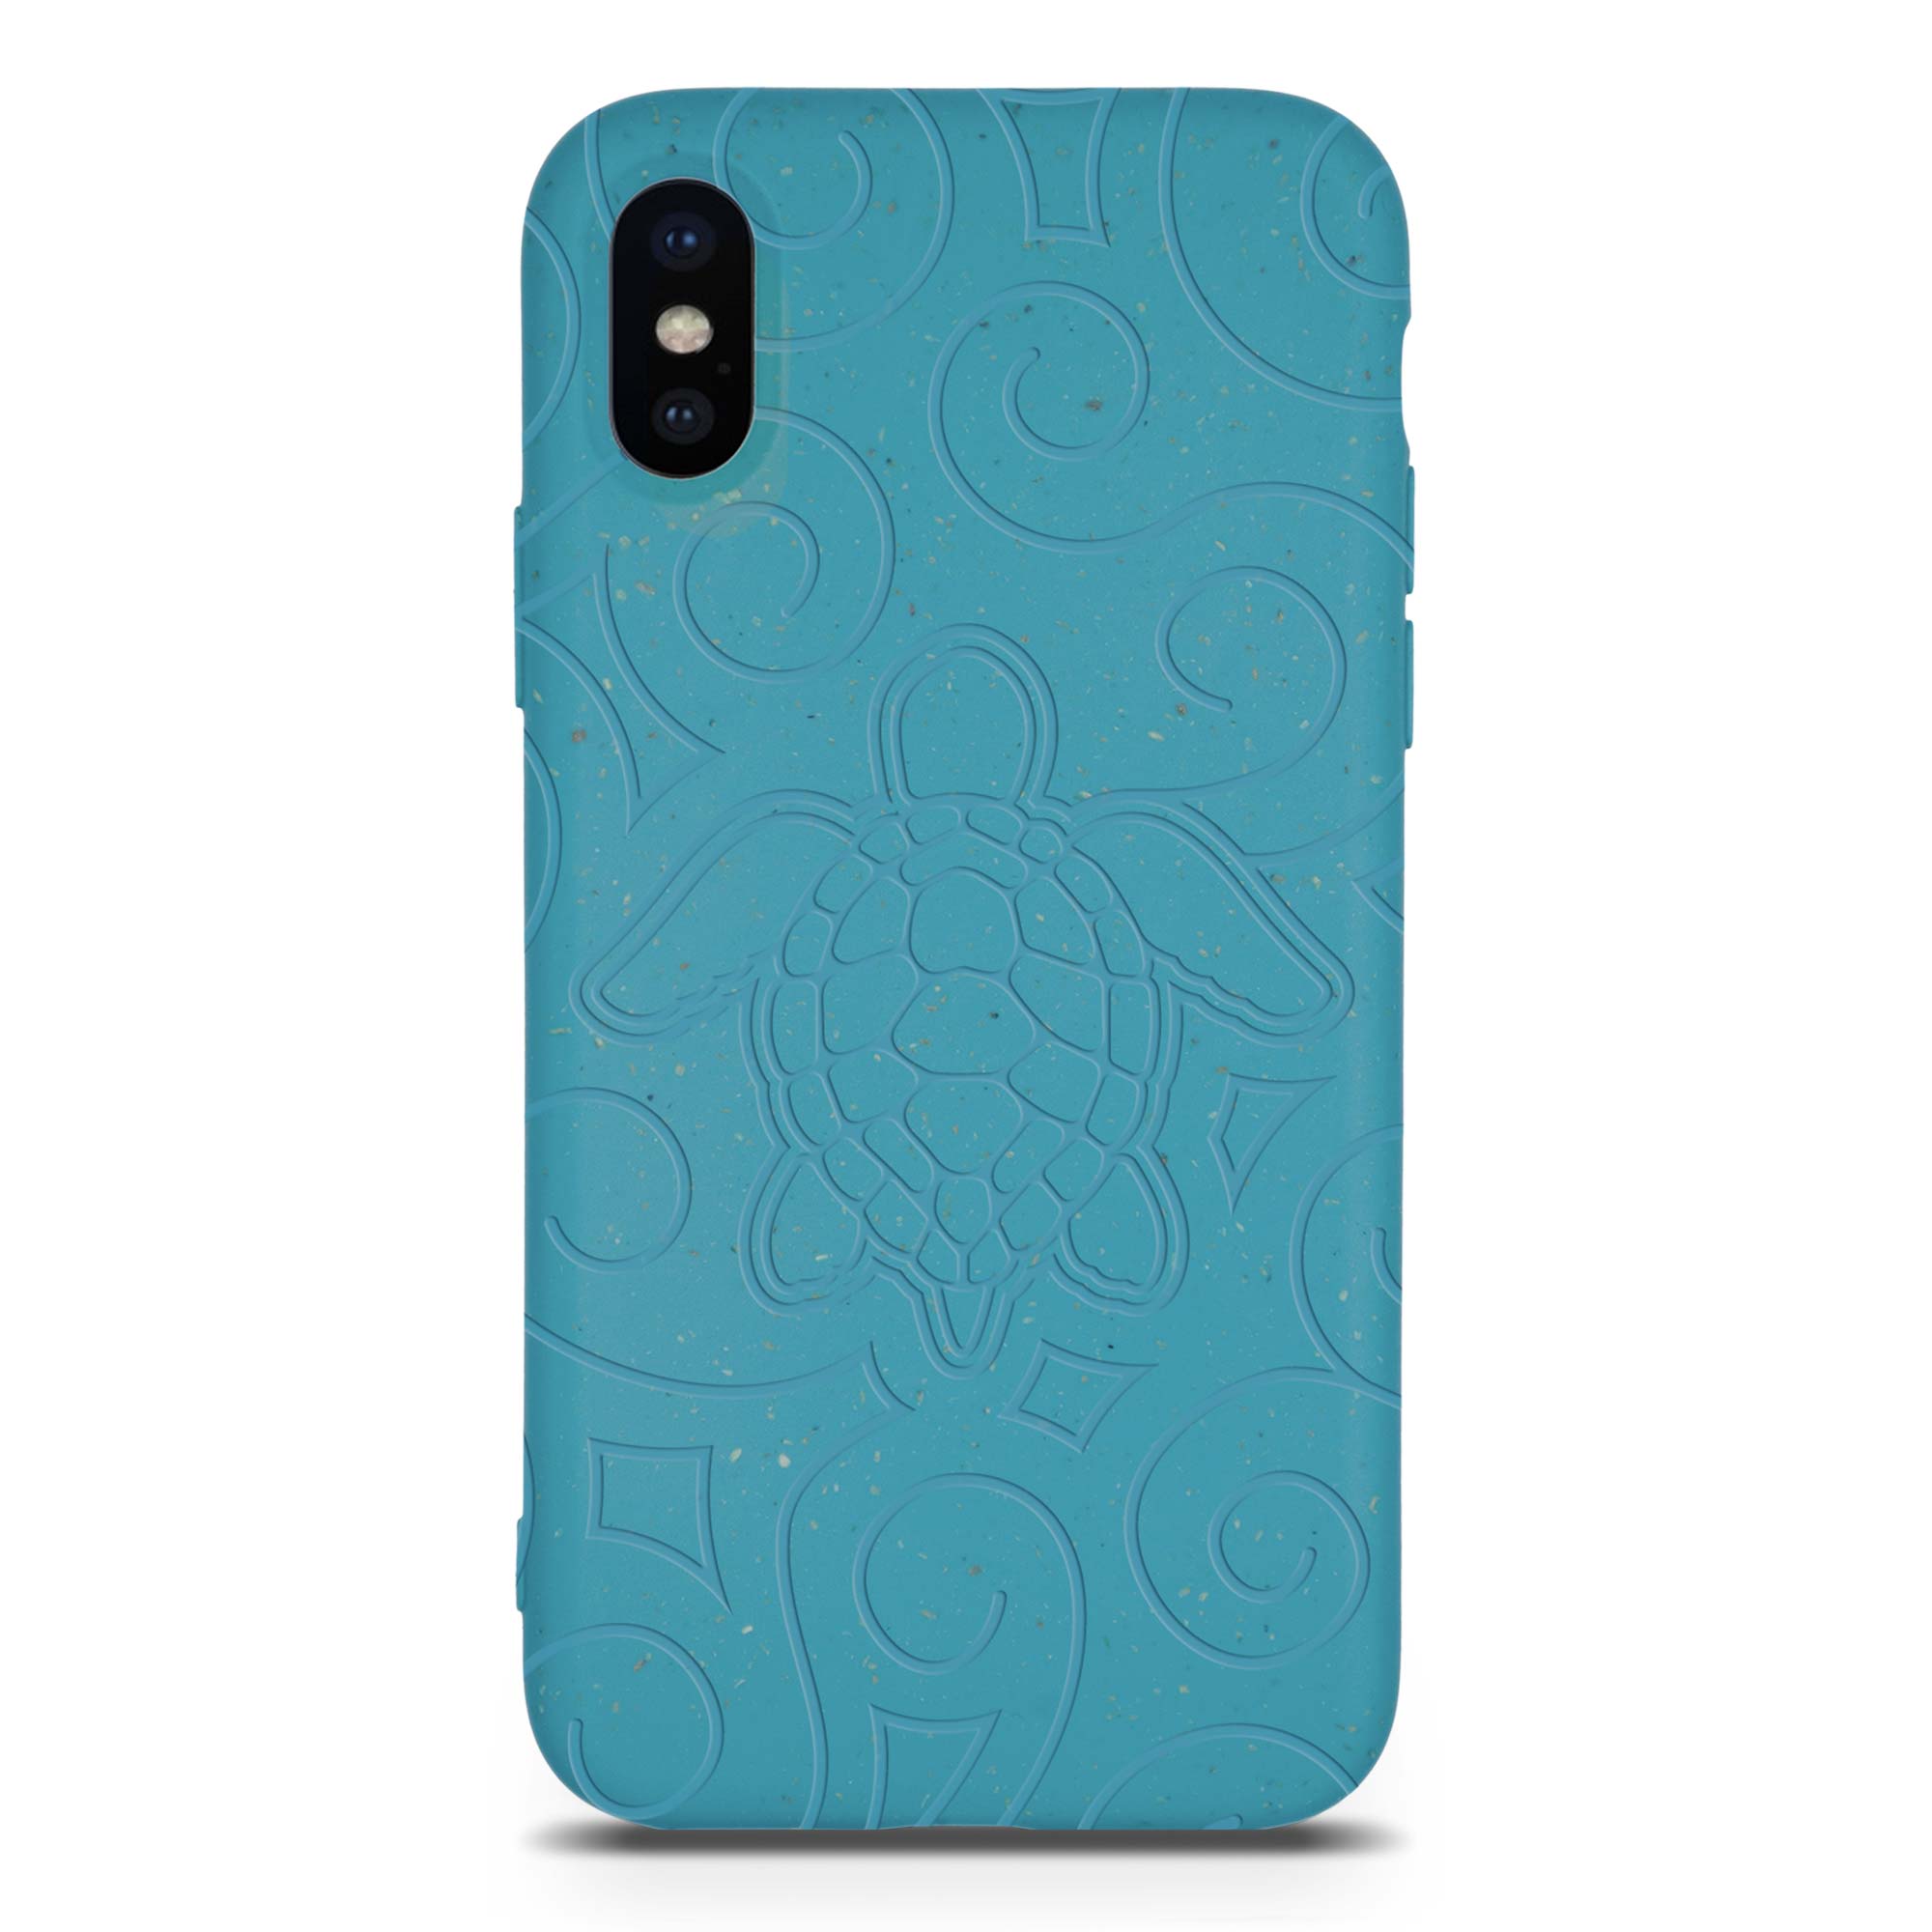 Ocean Turtle -  Biodegradable phone case - Ocean Blue and Black